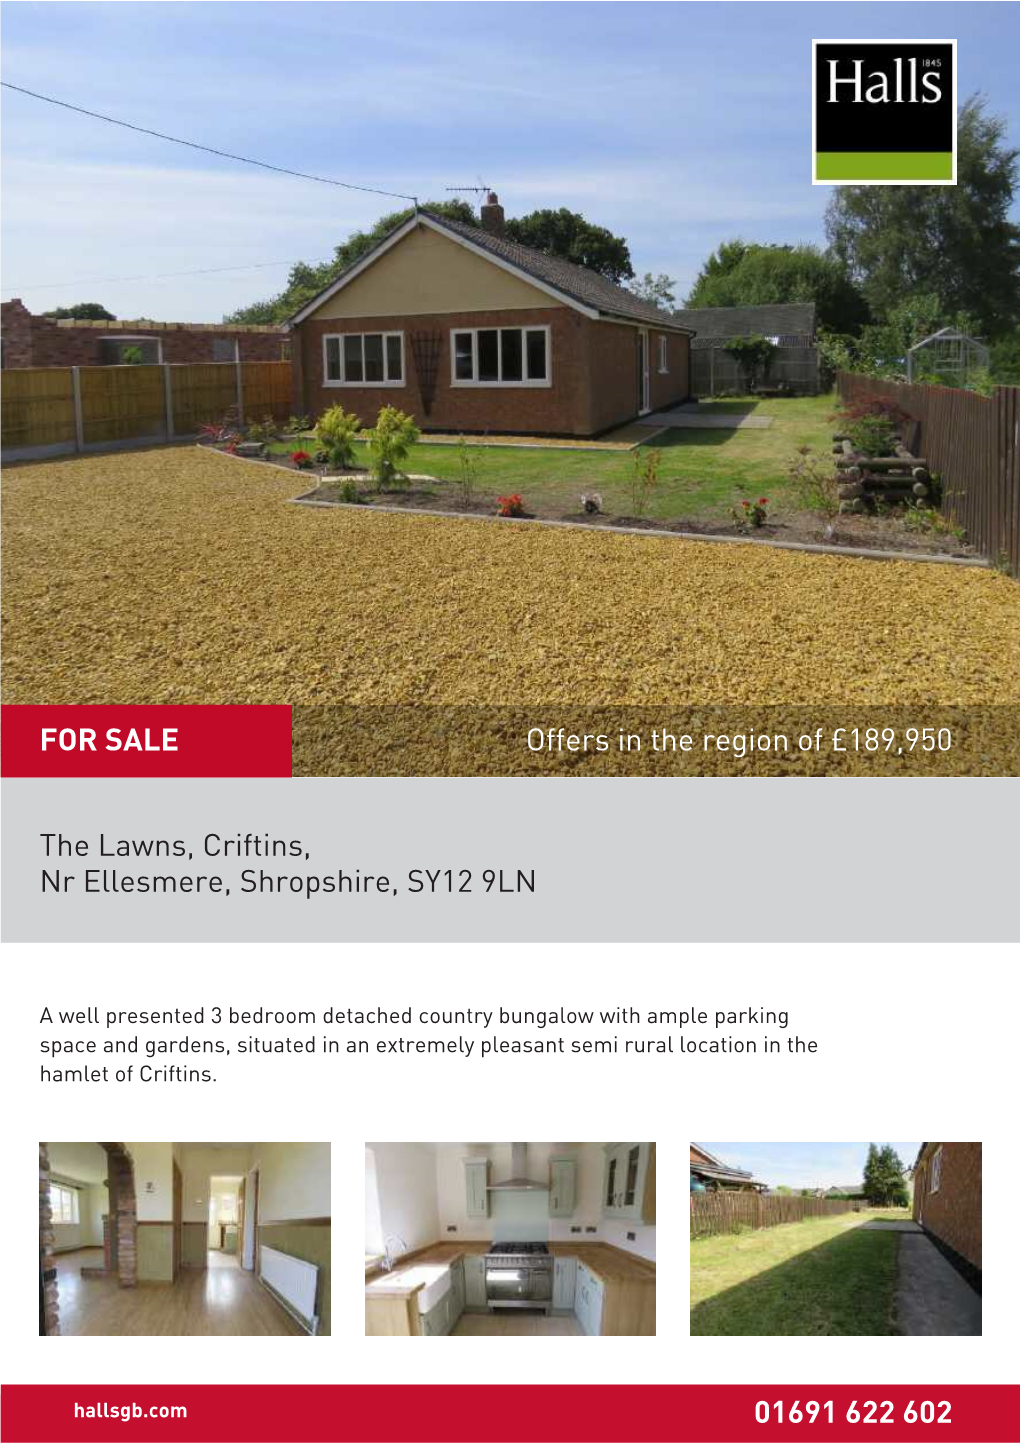 The Lawns, Criftins, Nr Ellesmere, Shropshire, SY12 9LN